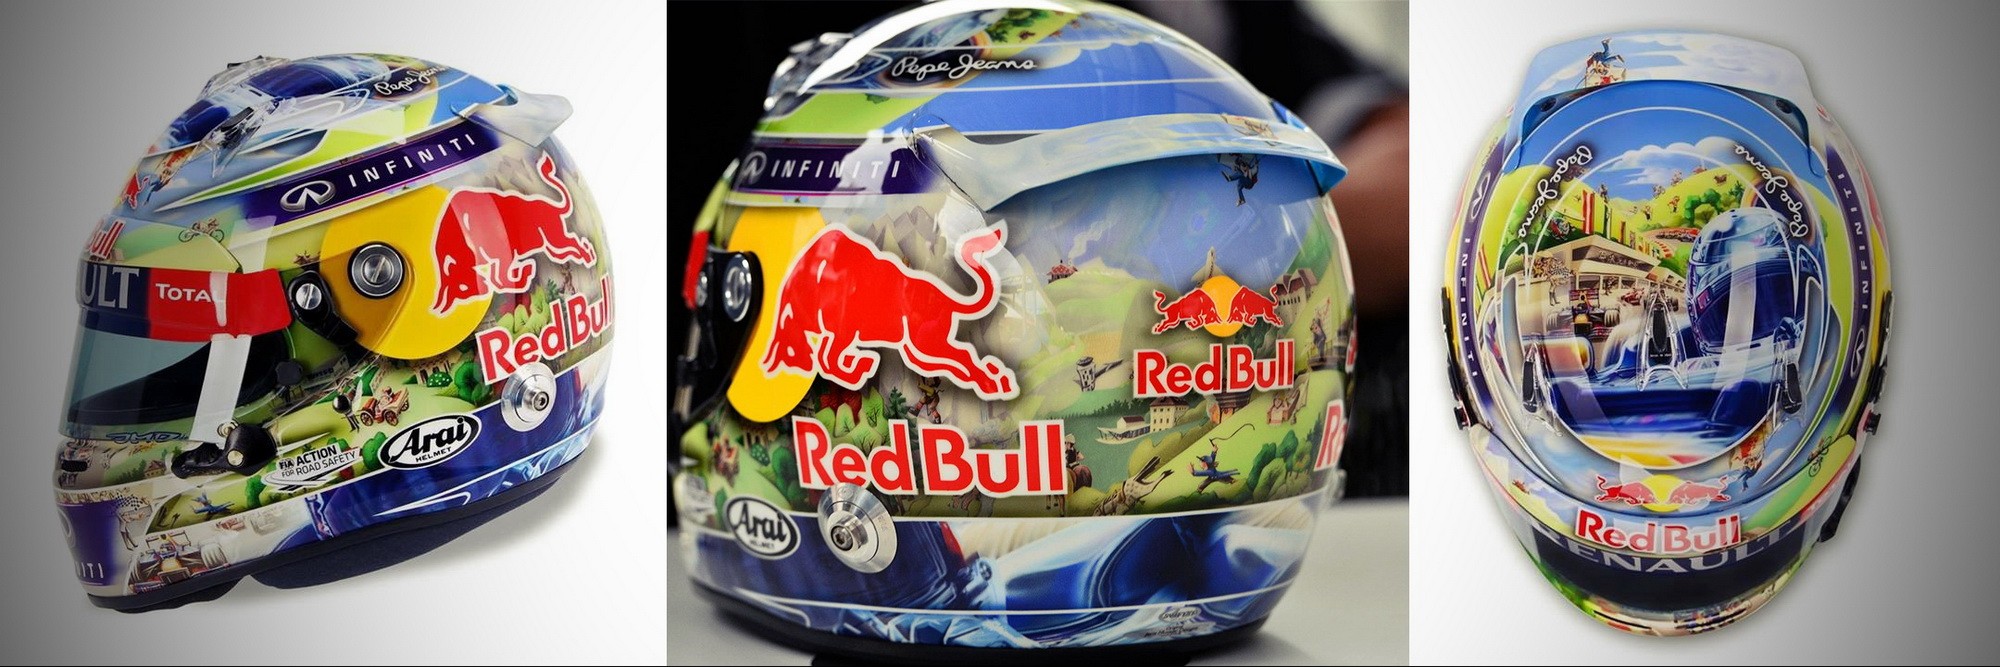 Шлем Себастьяна Феттеля на Гран-При Бразилии 2013 | 2013 Brazilian Grand Prix helmet of Sebastian Vettel